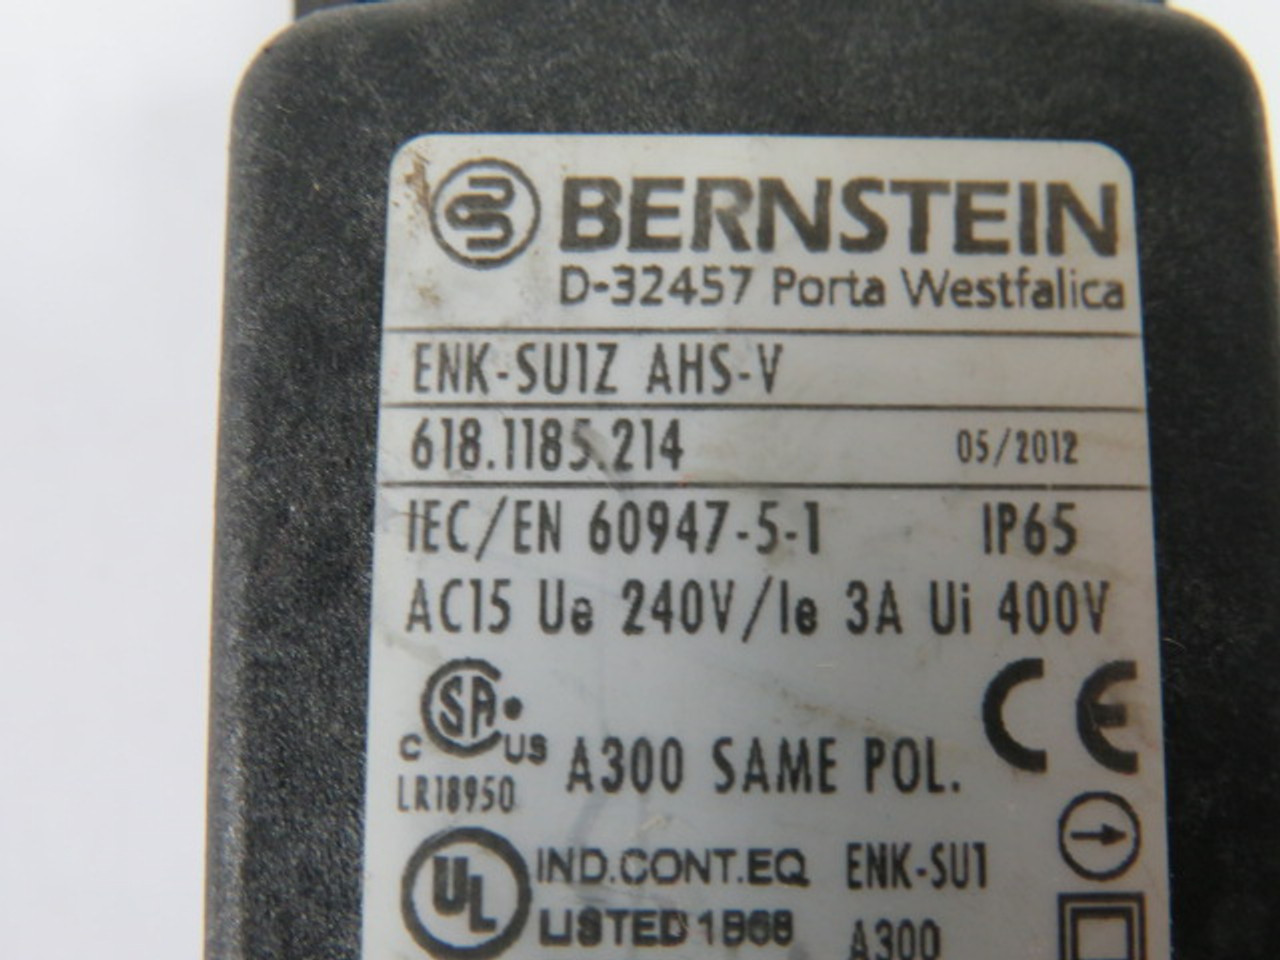 Bernstein 618.1185.214 Plastic Bodied Limit Switch 10A 500V 1/2" NPT USED